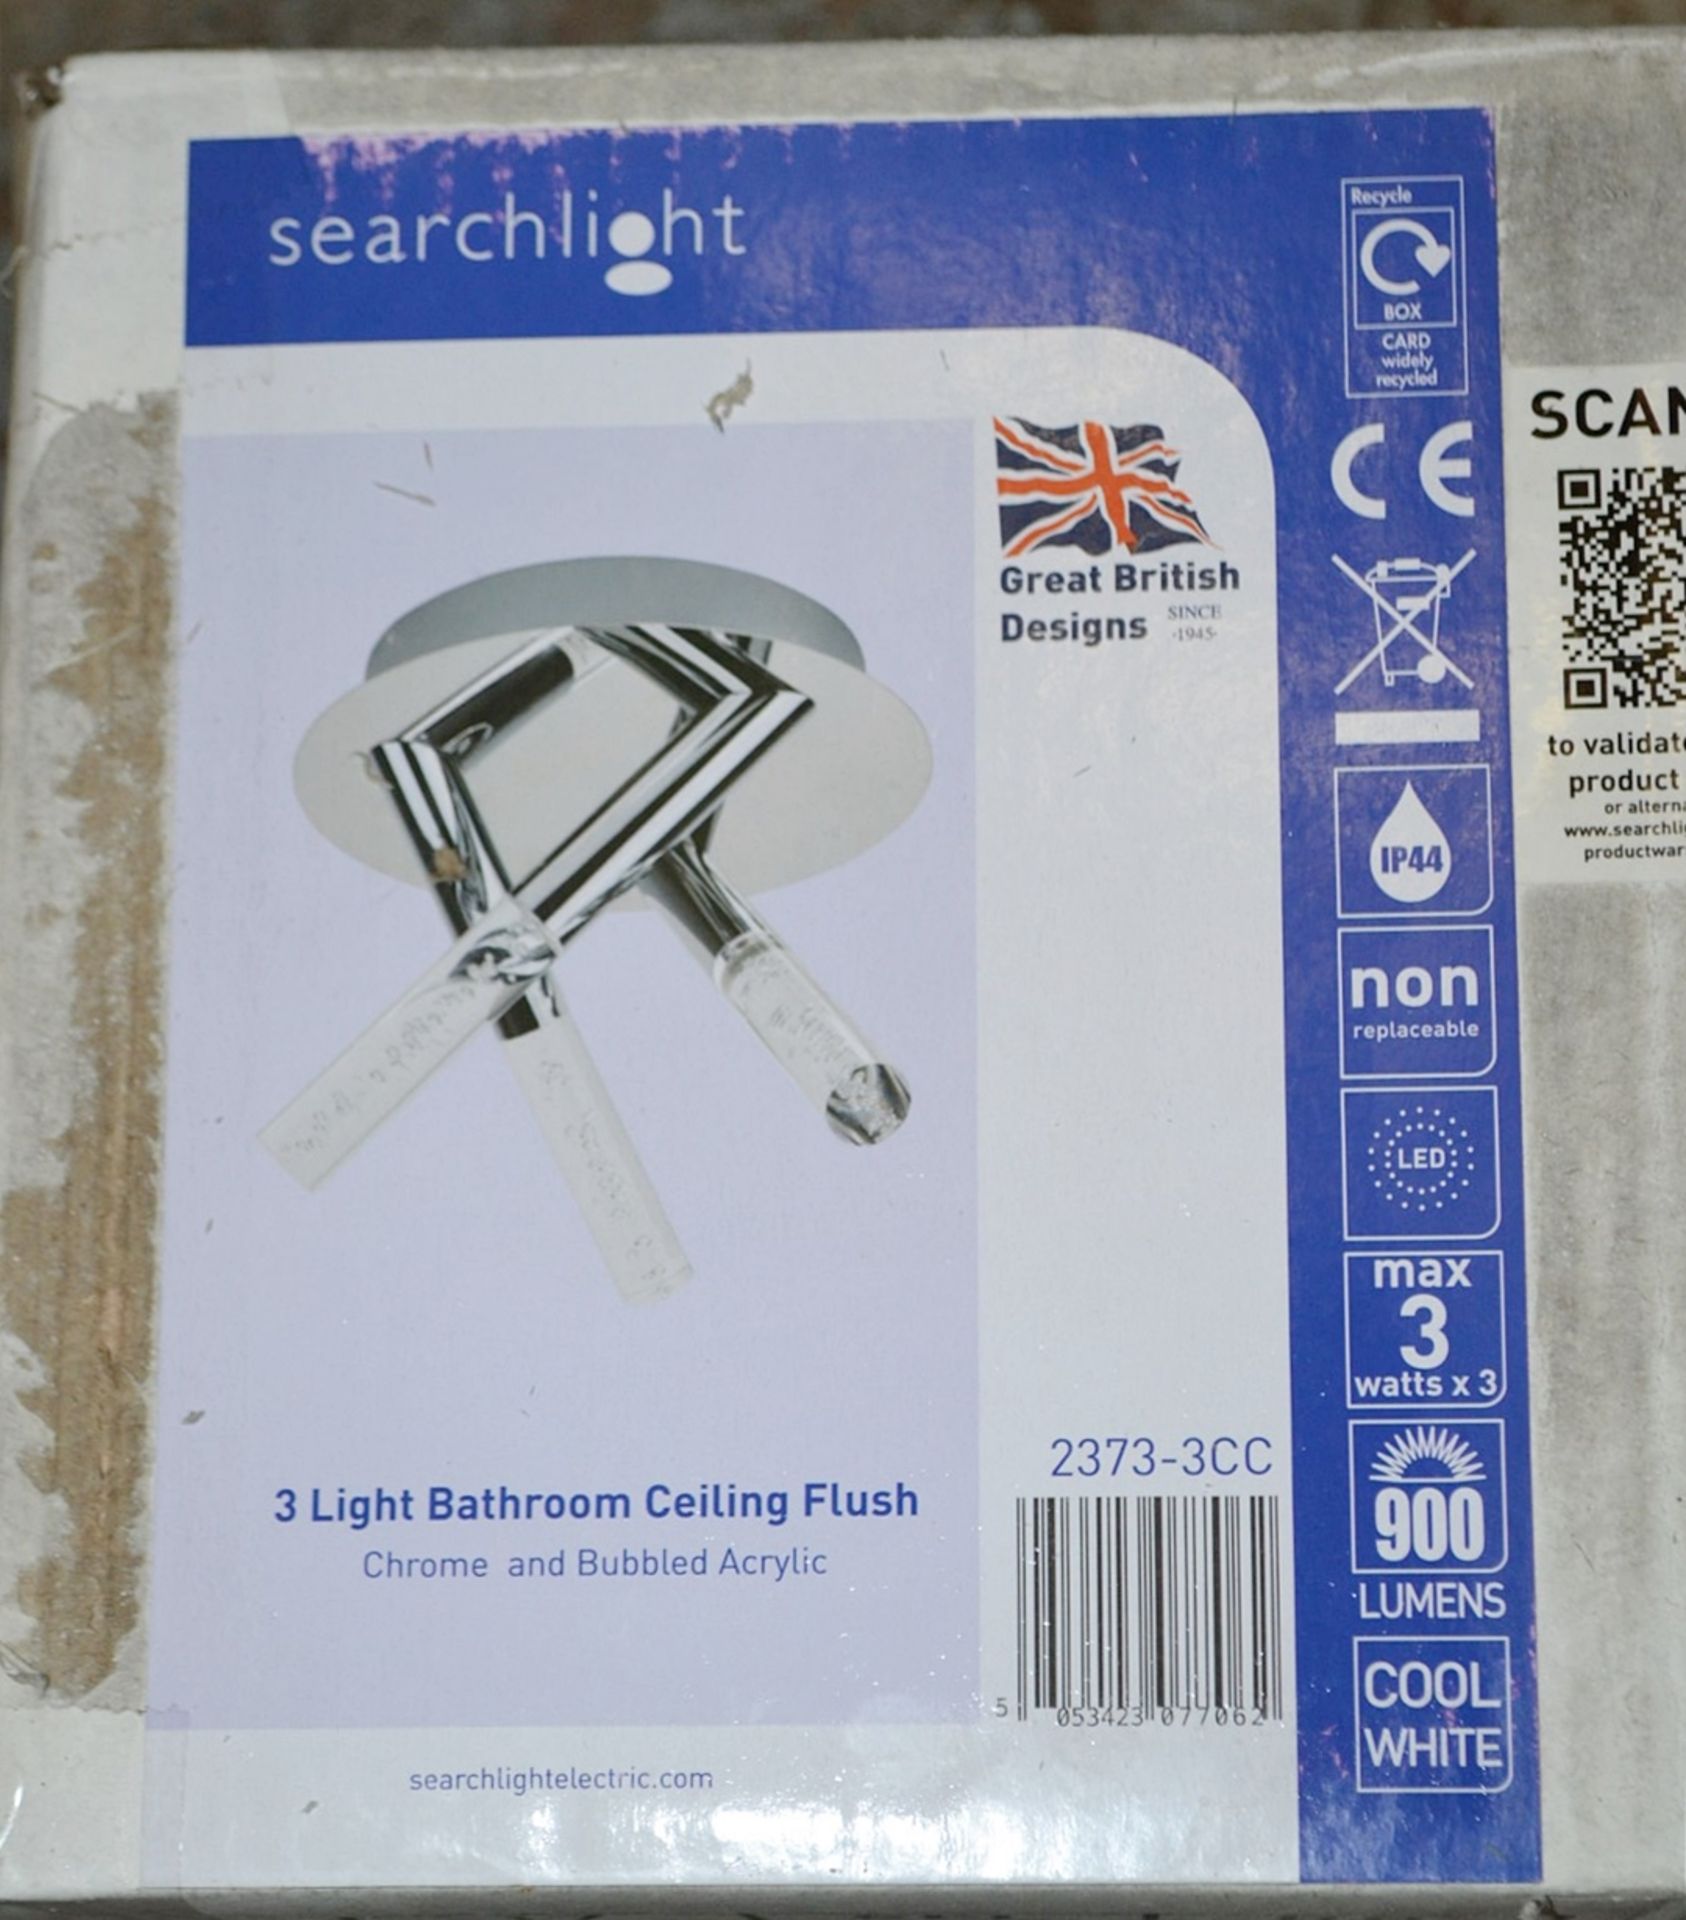 2 x Searchlight 3-Light Bathroom Ceiling Flush Light With bubbled Acrylic and Chrome Rods - 2373-3CC